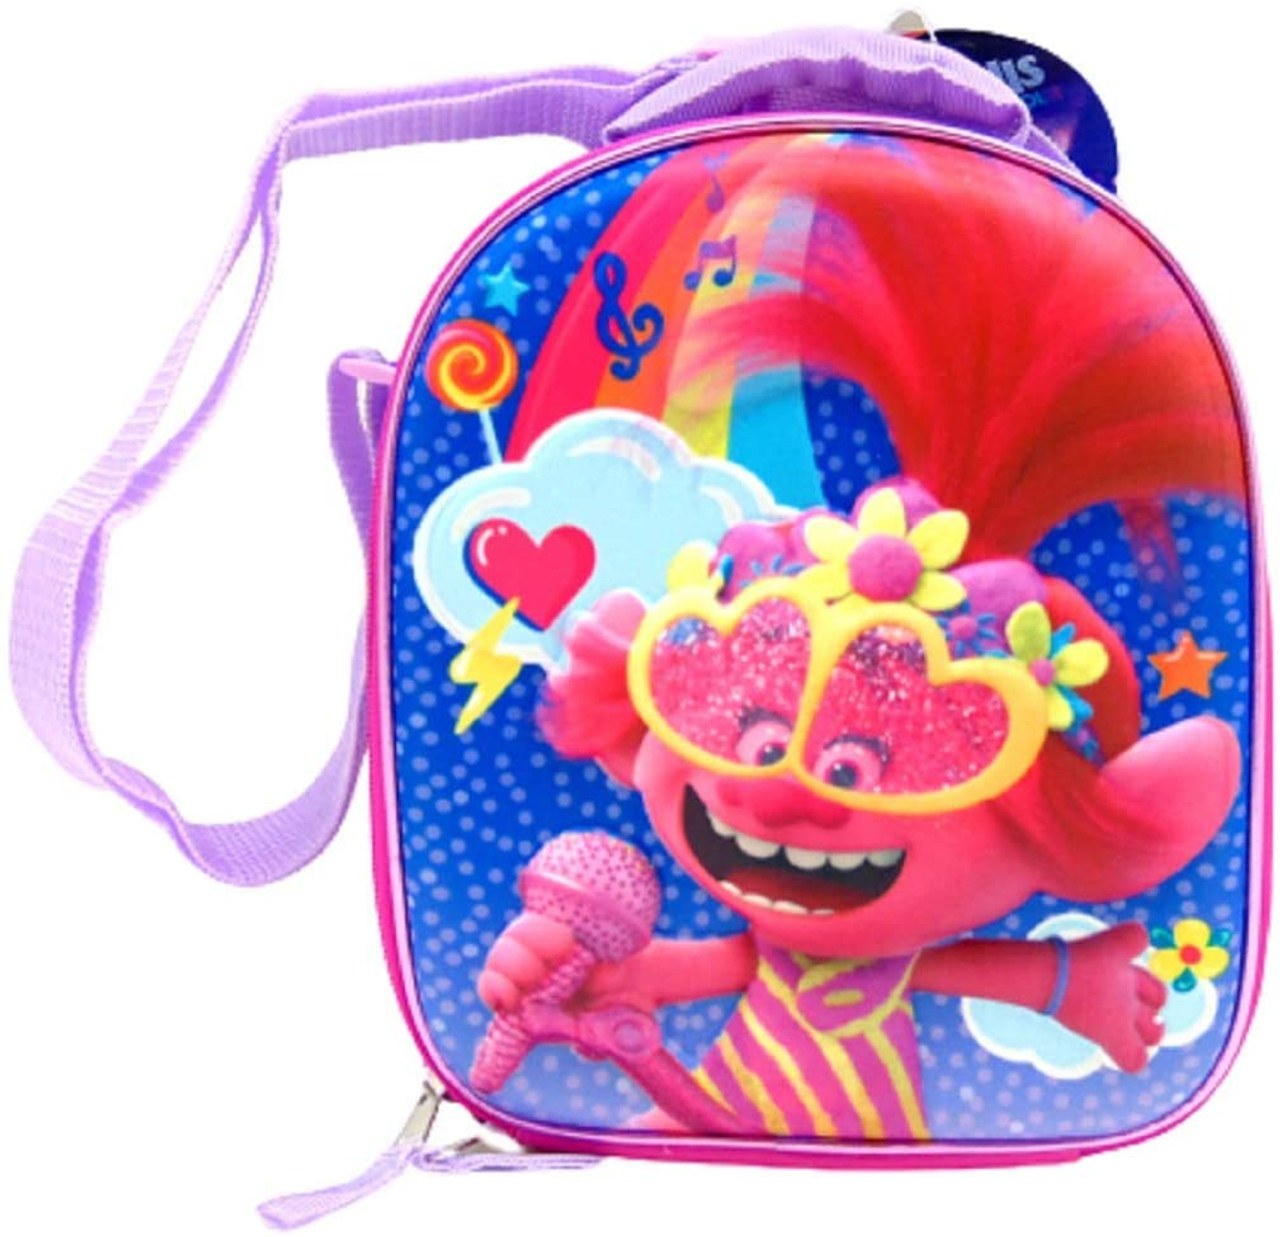 Dreamworks Trolls Insulated Lunch Bag - Lunch Box - Poppy's Fun Day